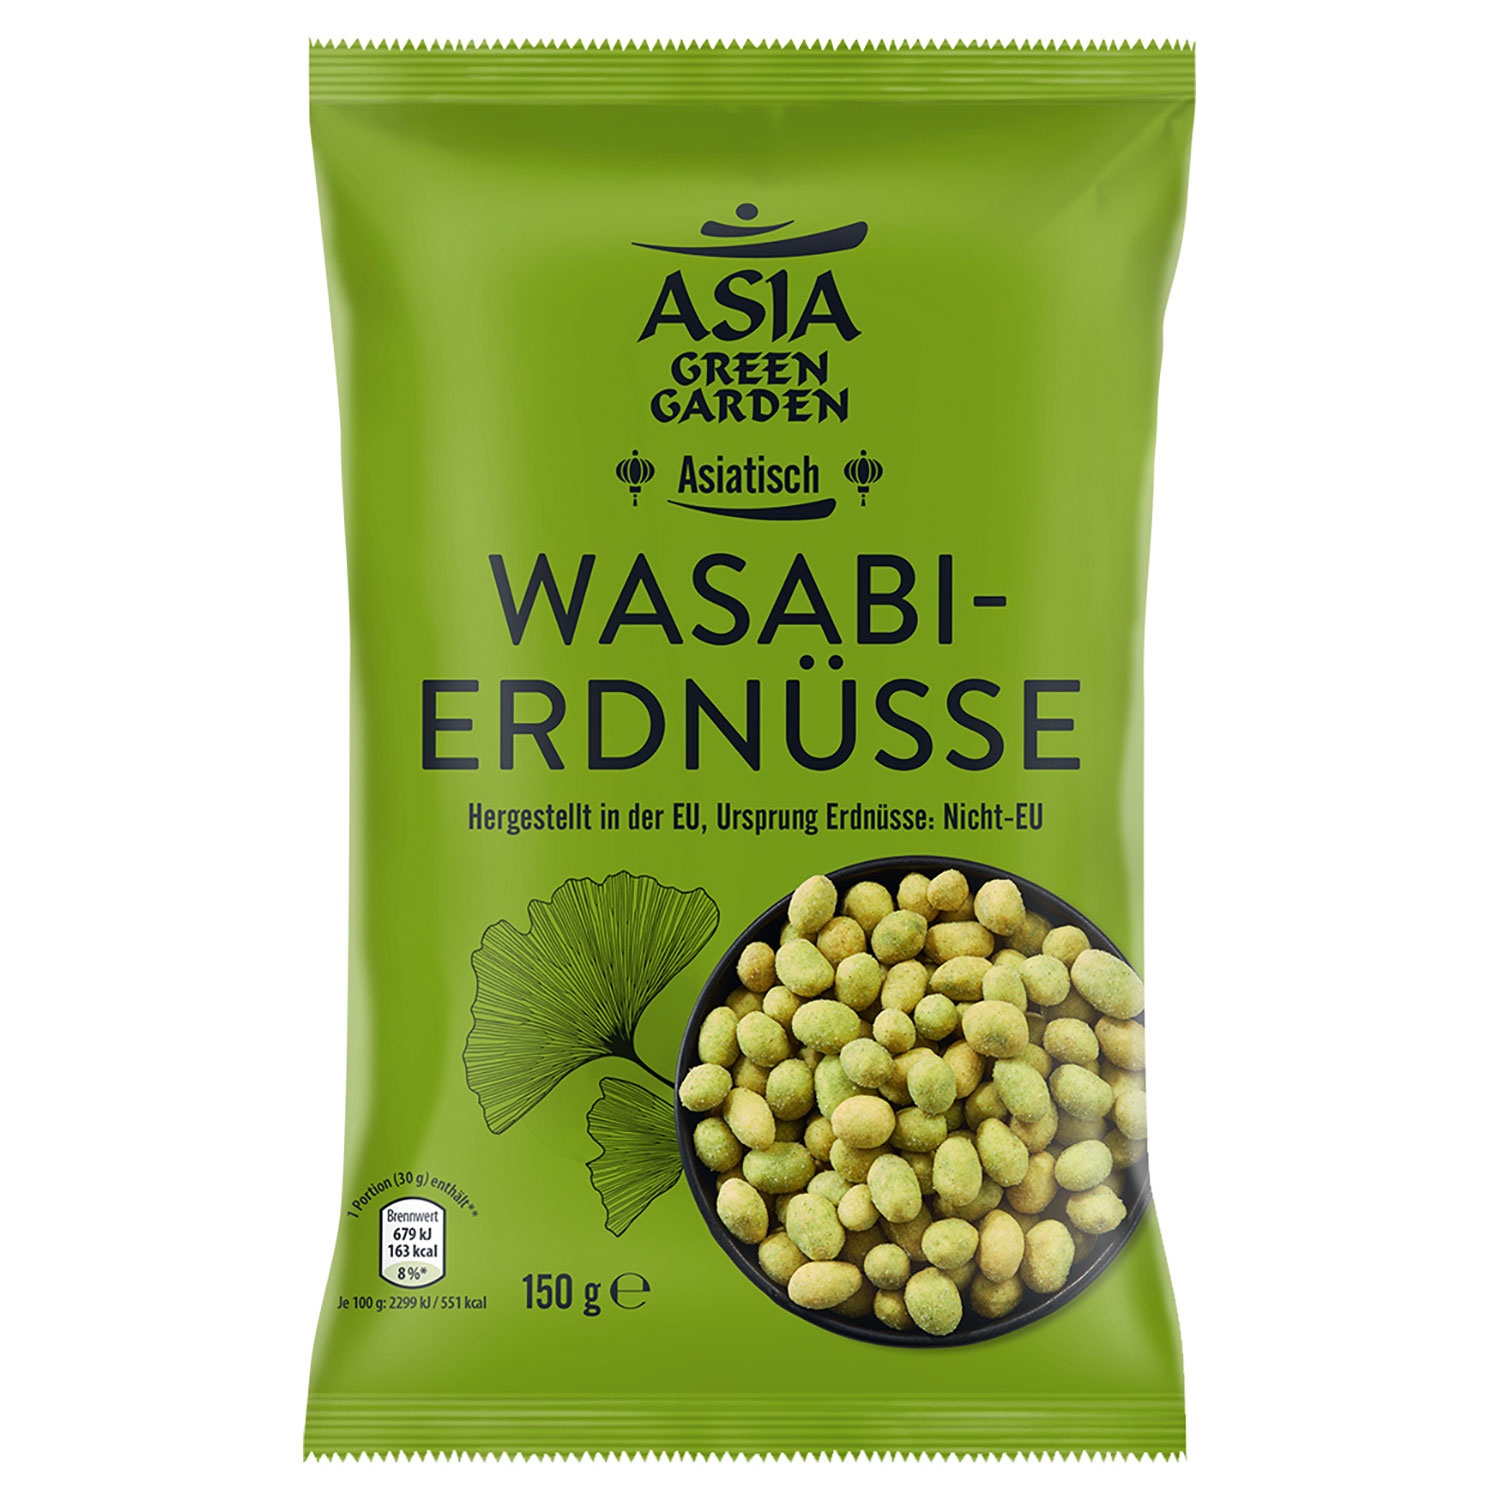 ASIA GREEN GARDEN Snack-Mix 150 g